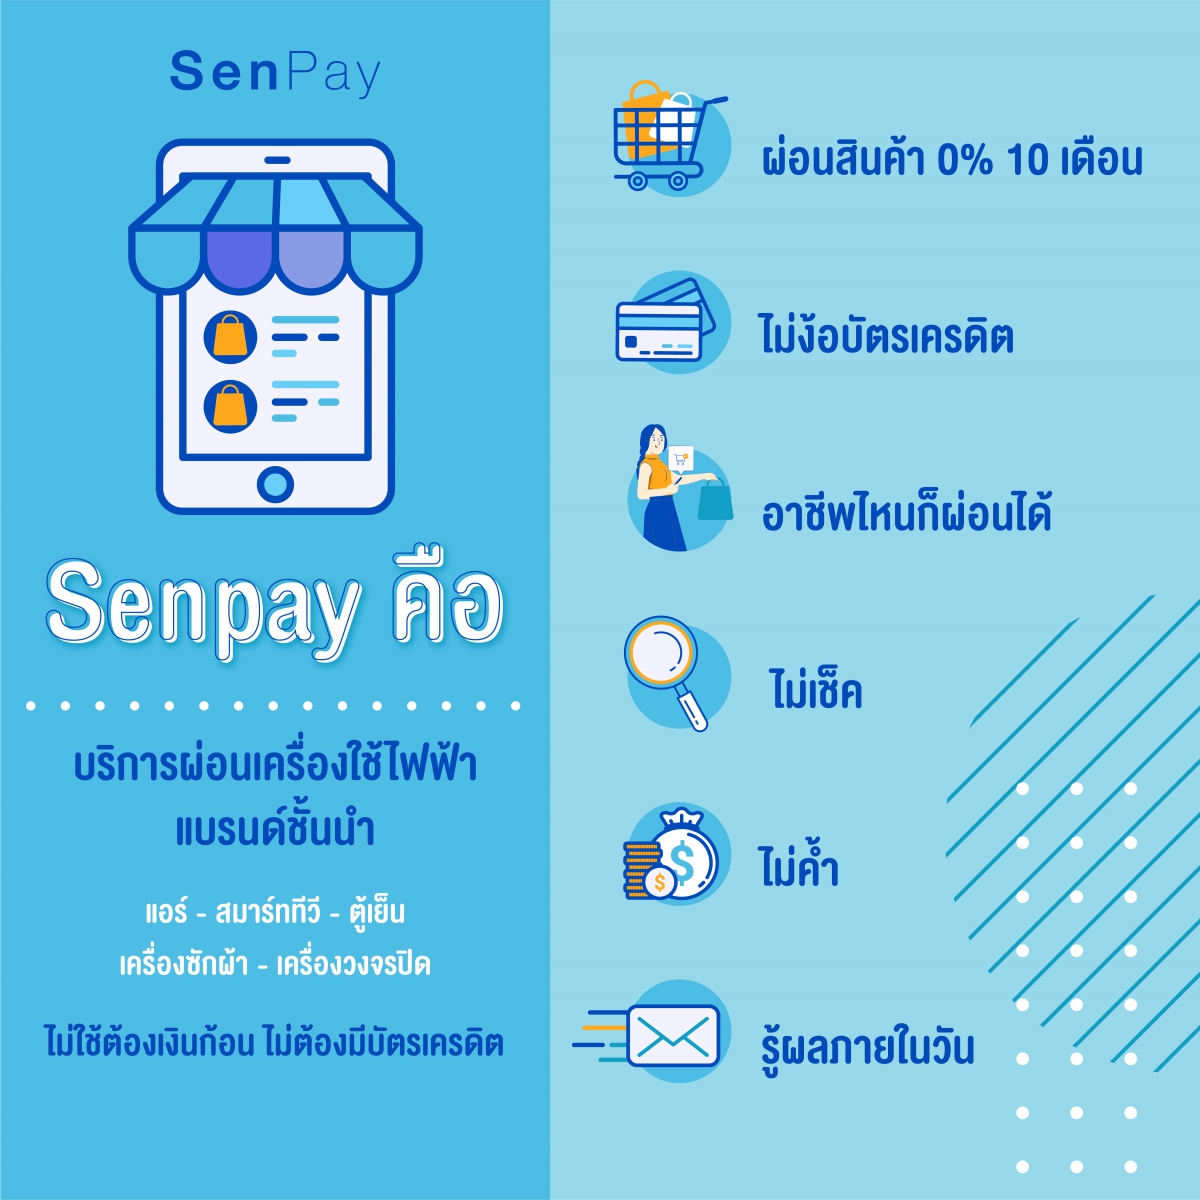 Senpay ดีอย่างไร | มารู้จัก Senpay บริการน้องใหม่ ที่ช่วยให้คนฉะเชิงเทราใช้ชีวิตง่ายขึ้น